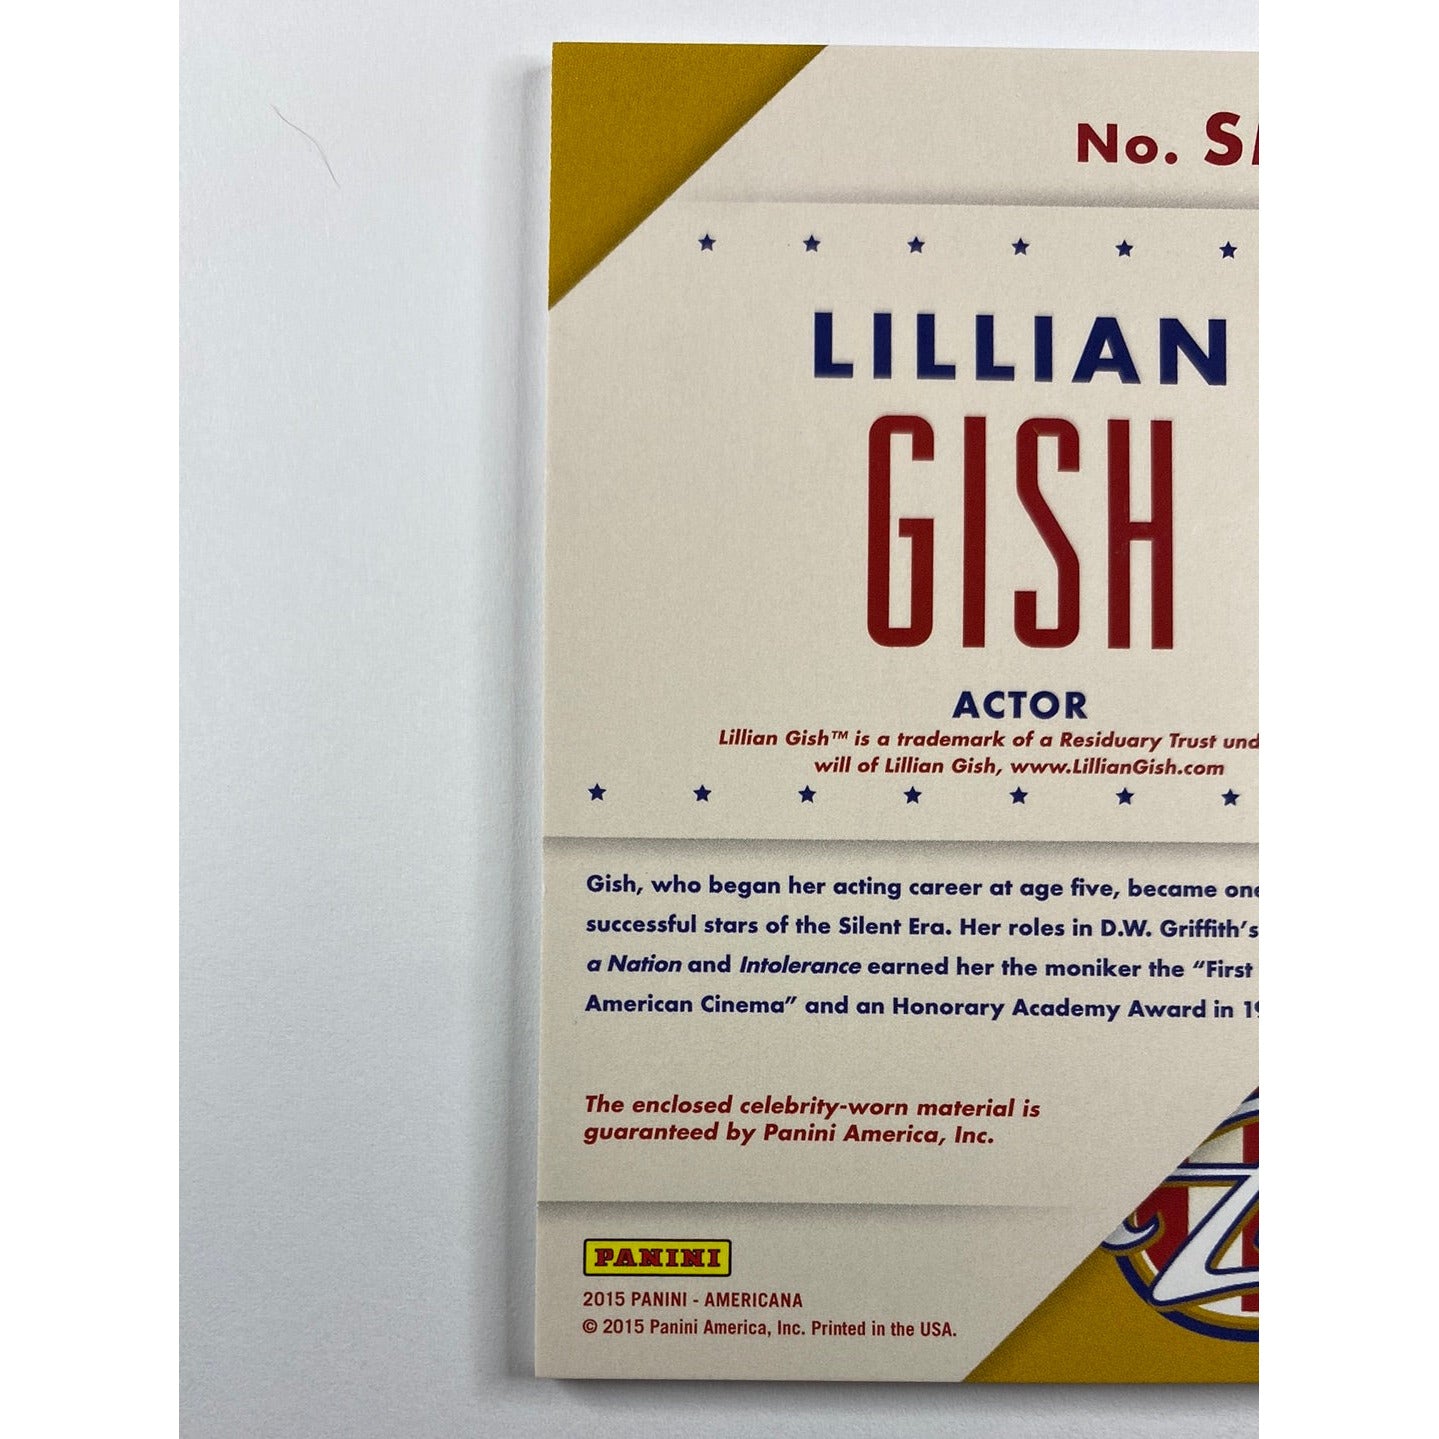 2015 Americana Lillian Gish Star Materials Patch